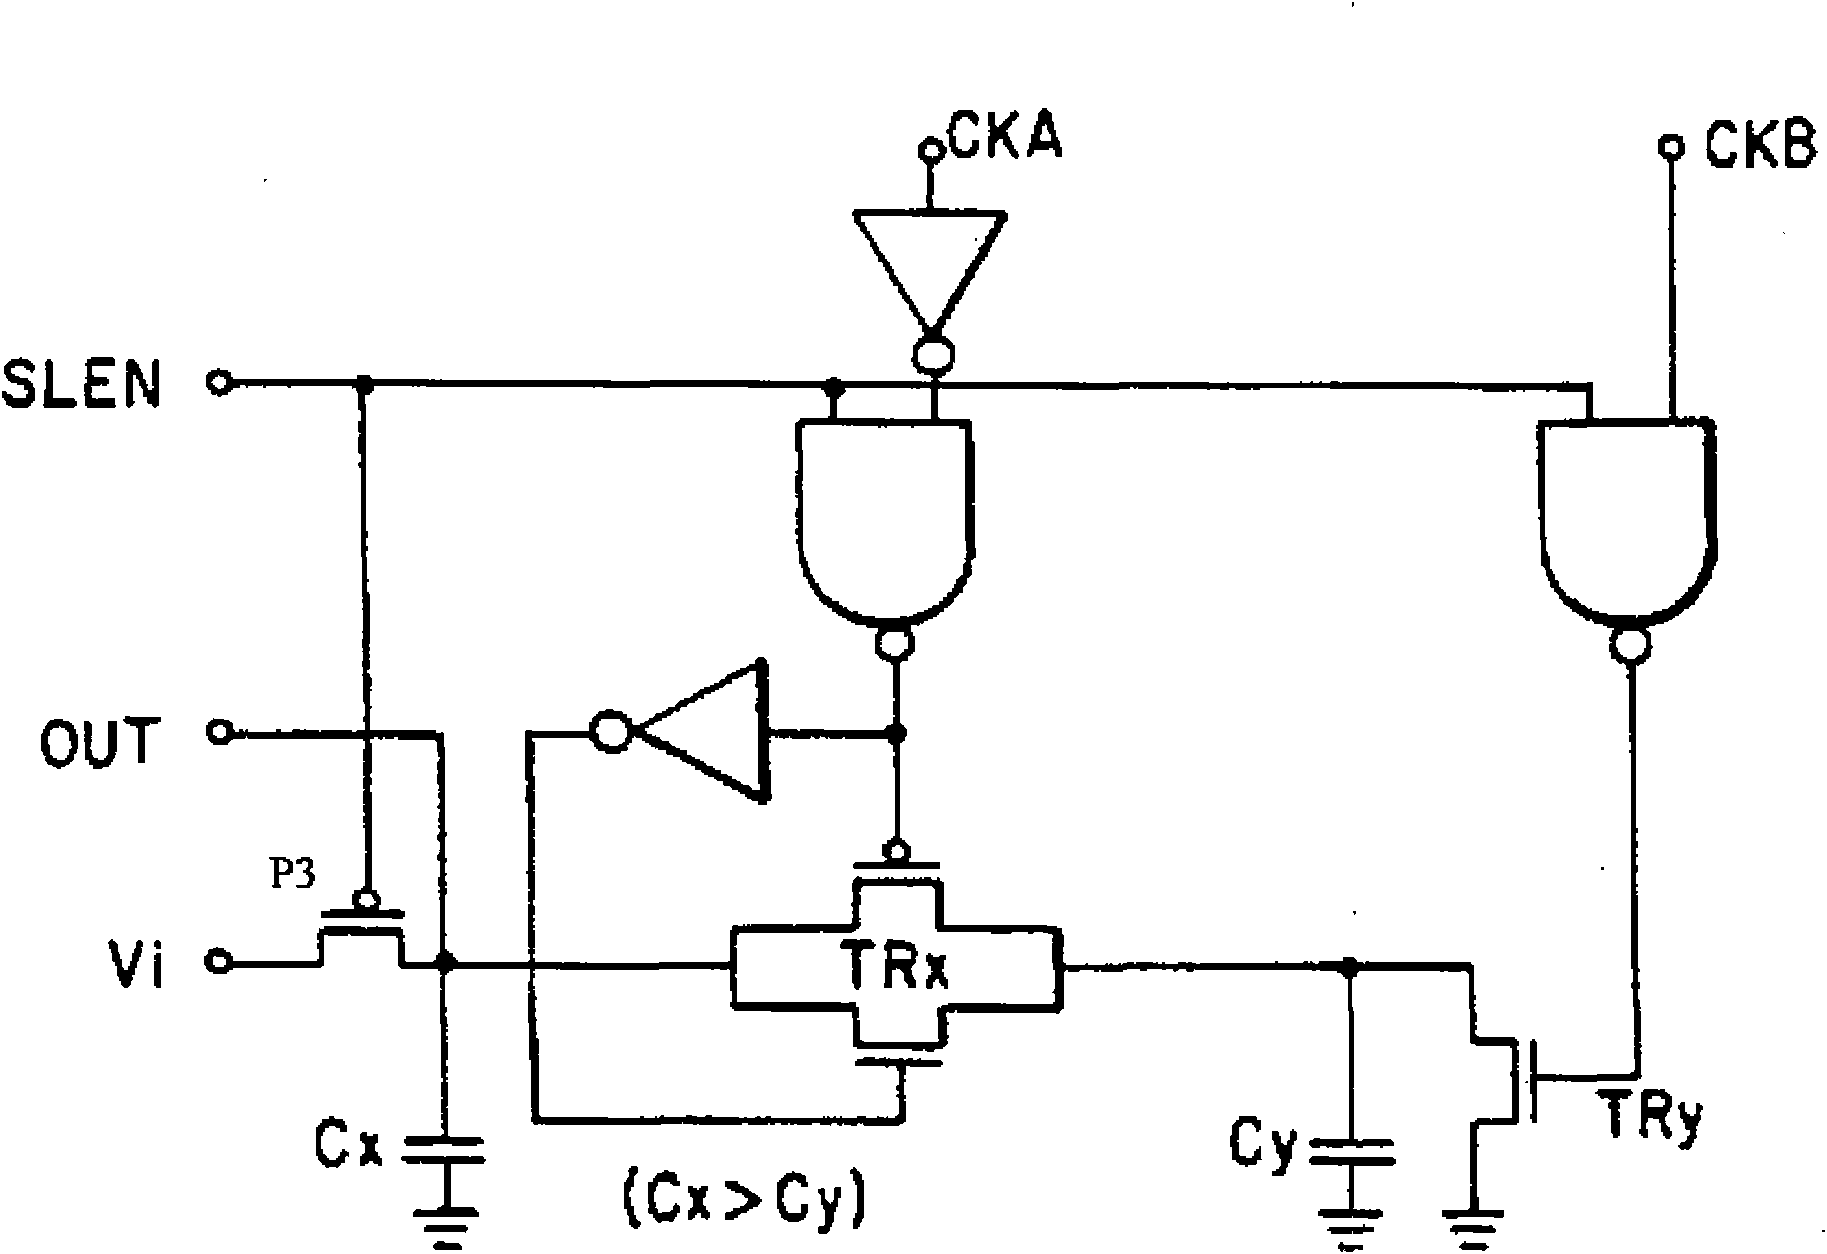 Negative voltage slope control circuit